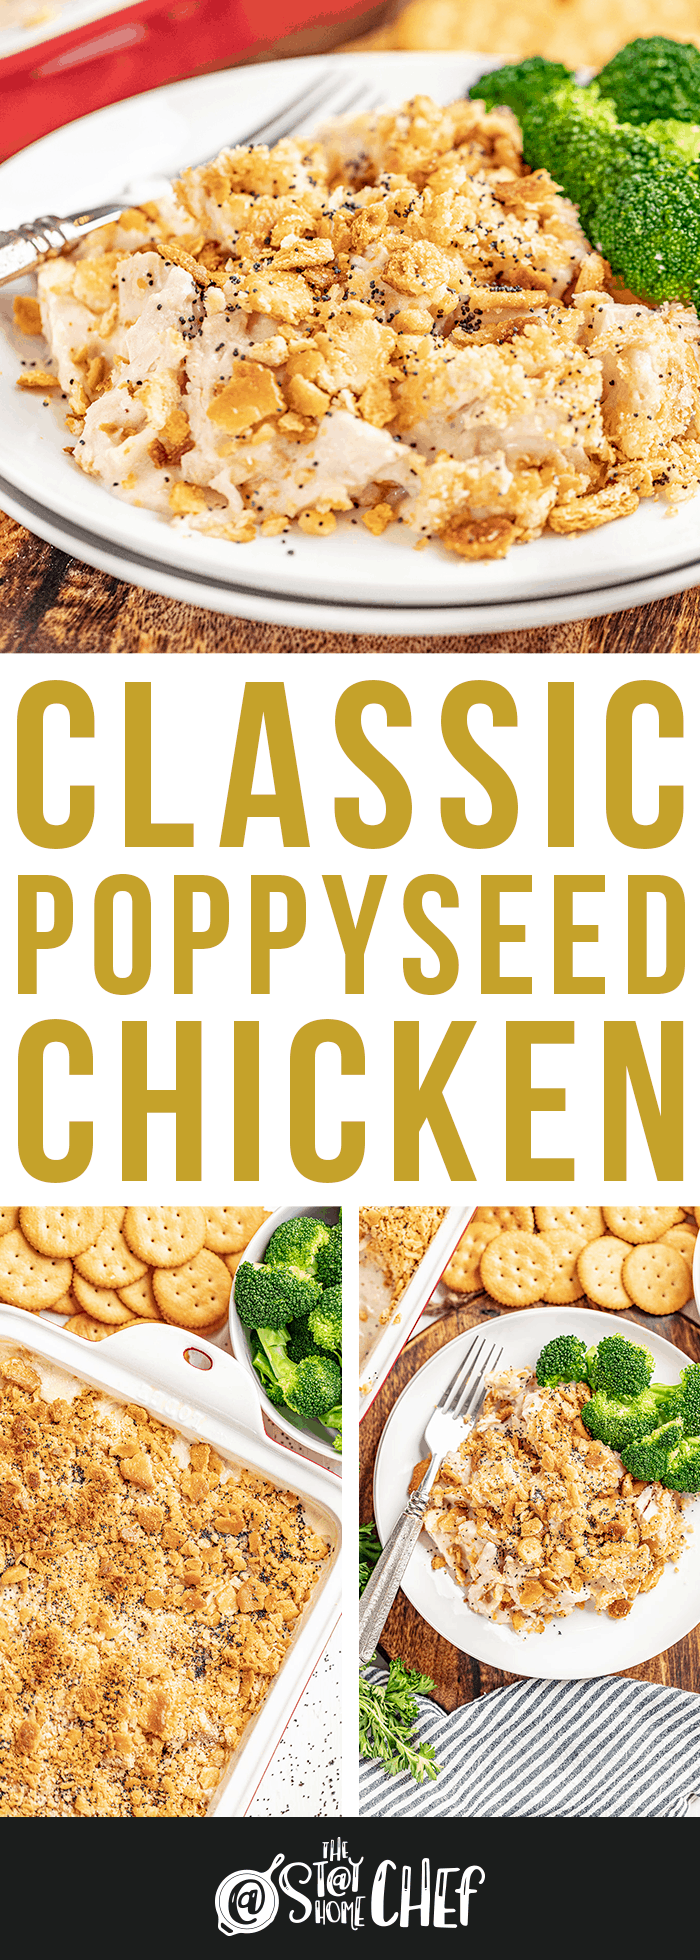 Classic Poppy Seed Chicken